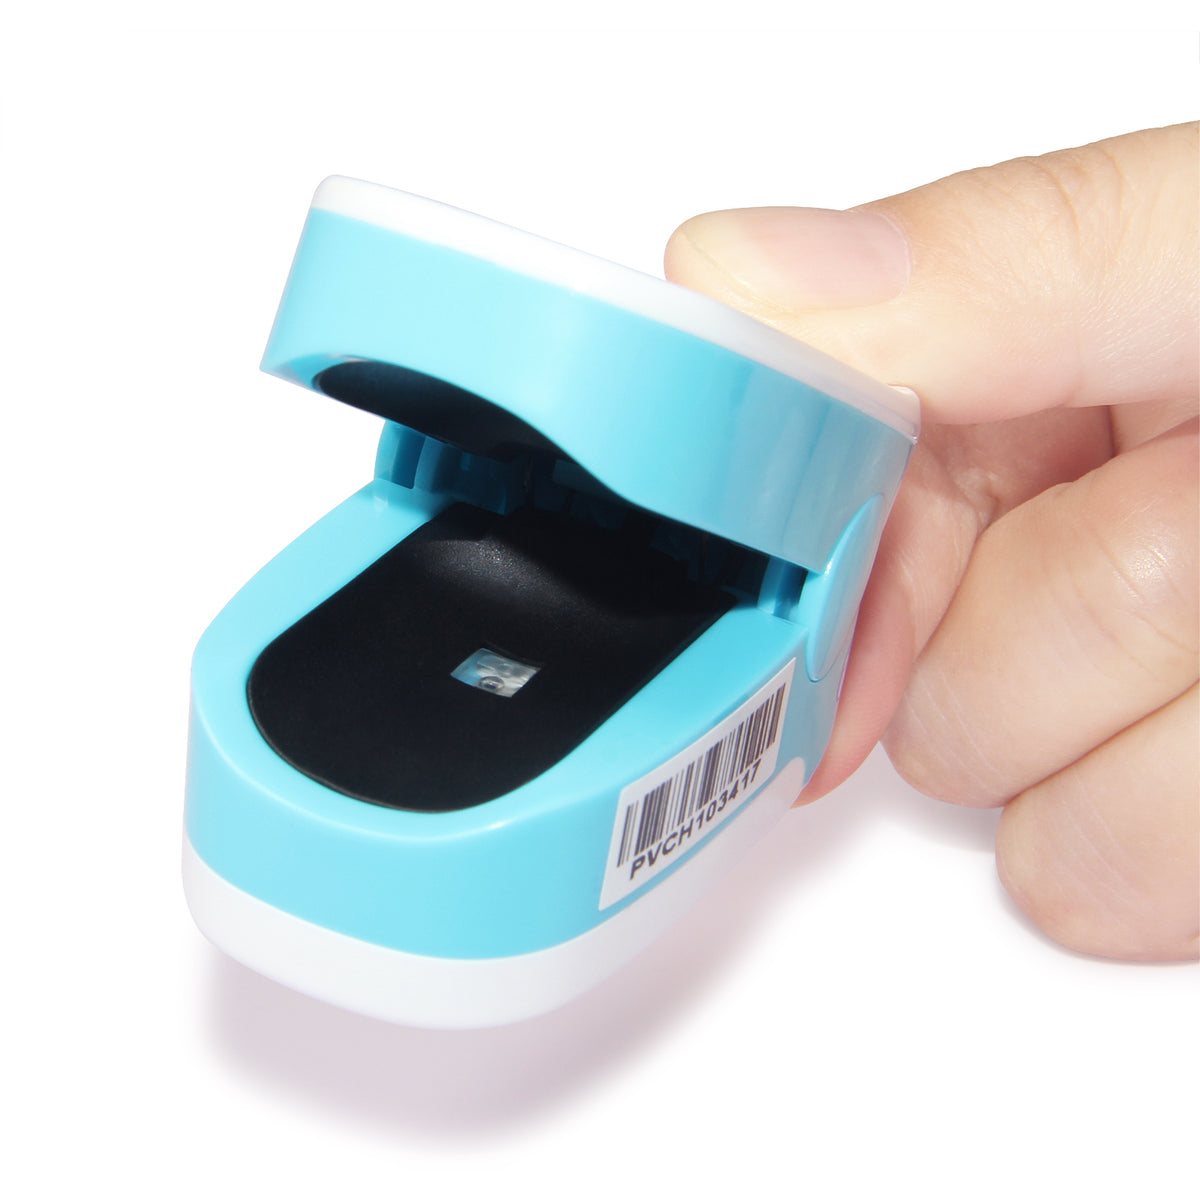 CONTEC50N Wireless Finger Pulse Tensiometer Medical ECG Oxymeter